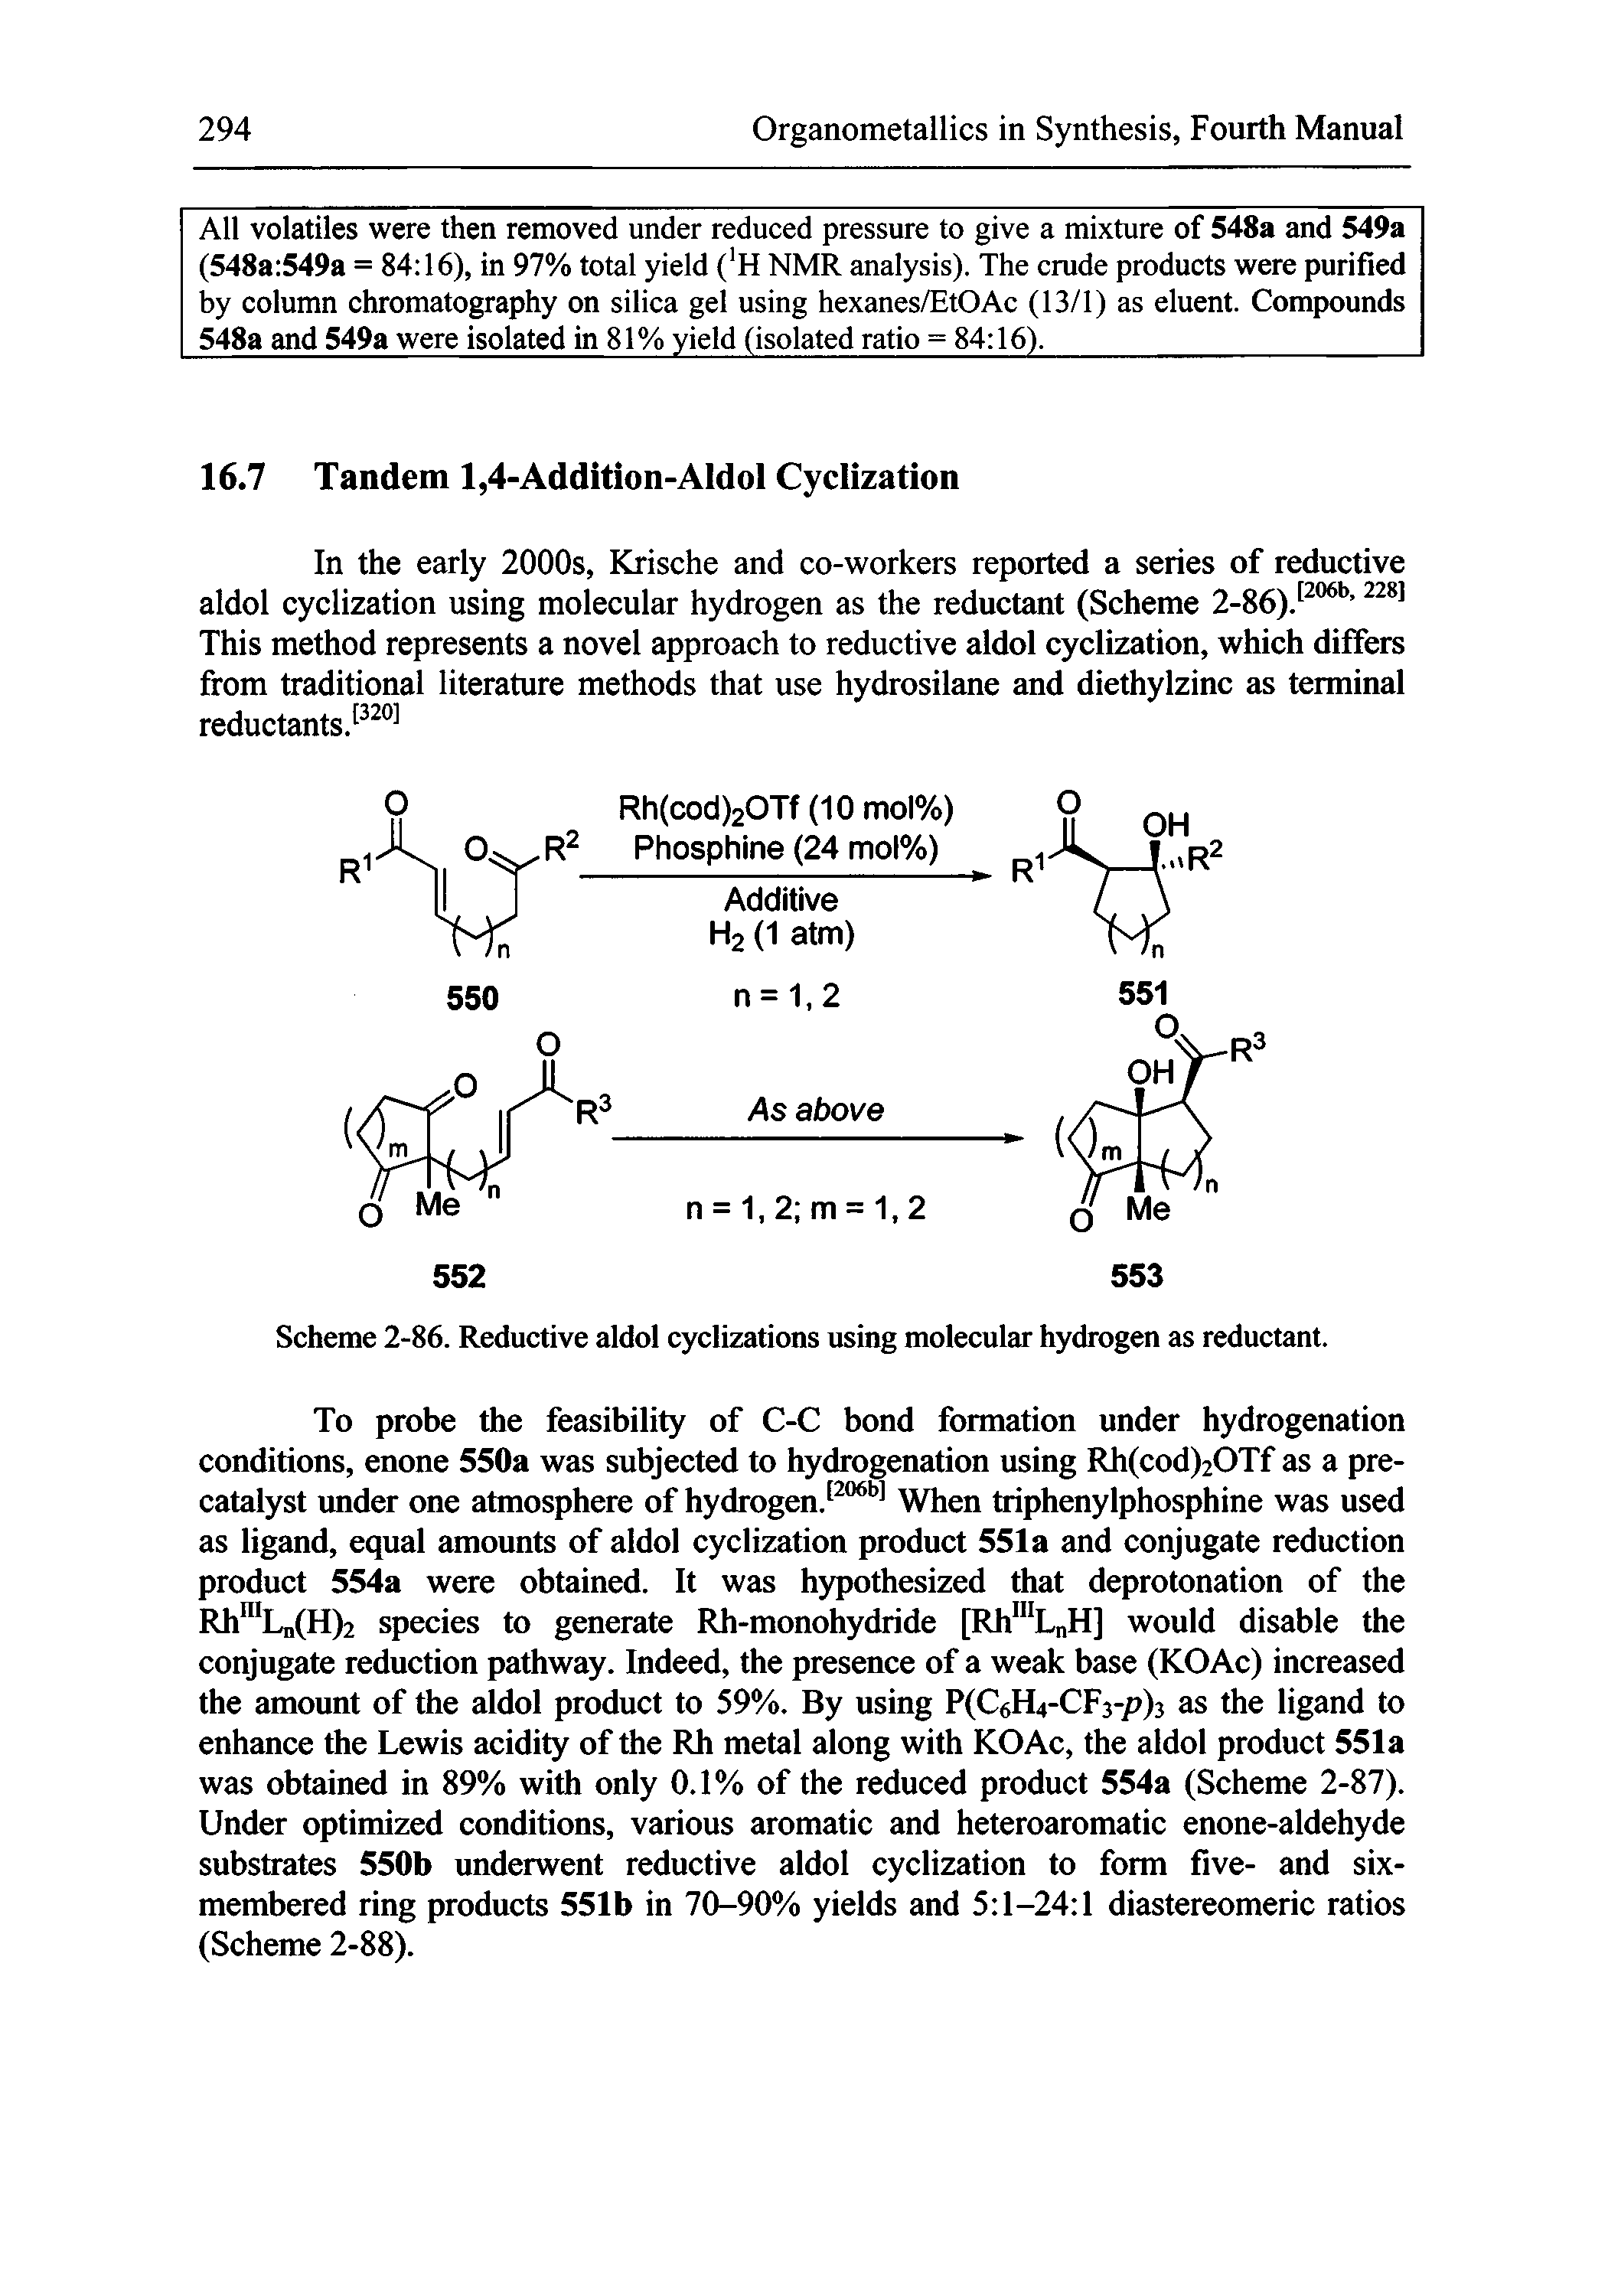 Scheme 2-86. Reductive aldol cyclizations using molecular hydrogen as reductant.